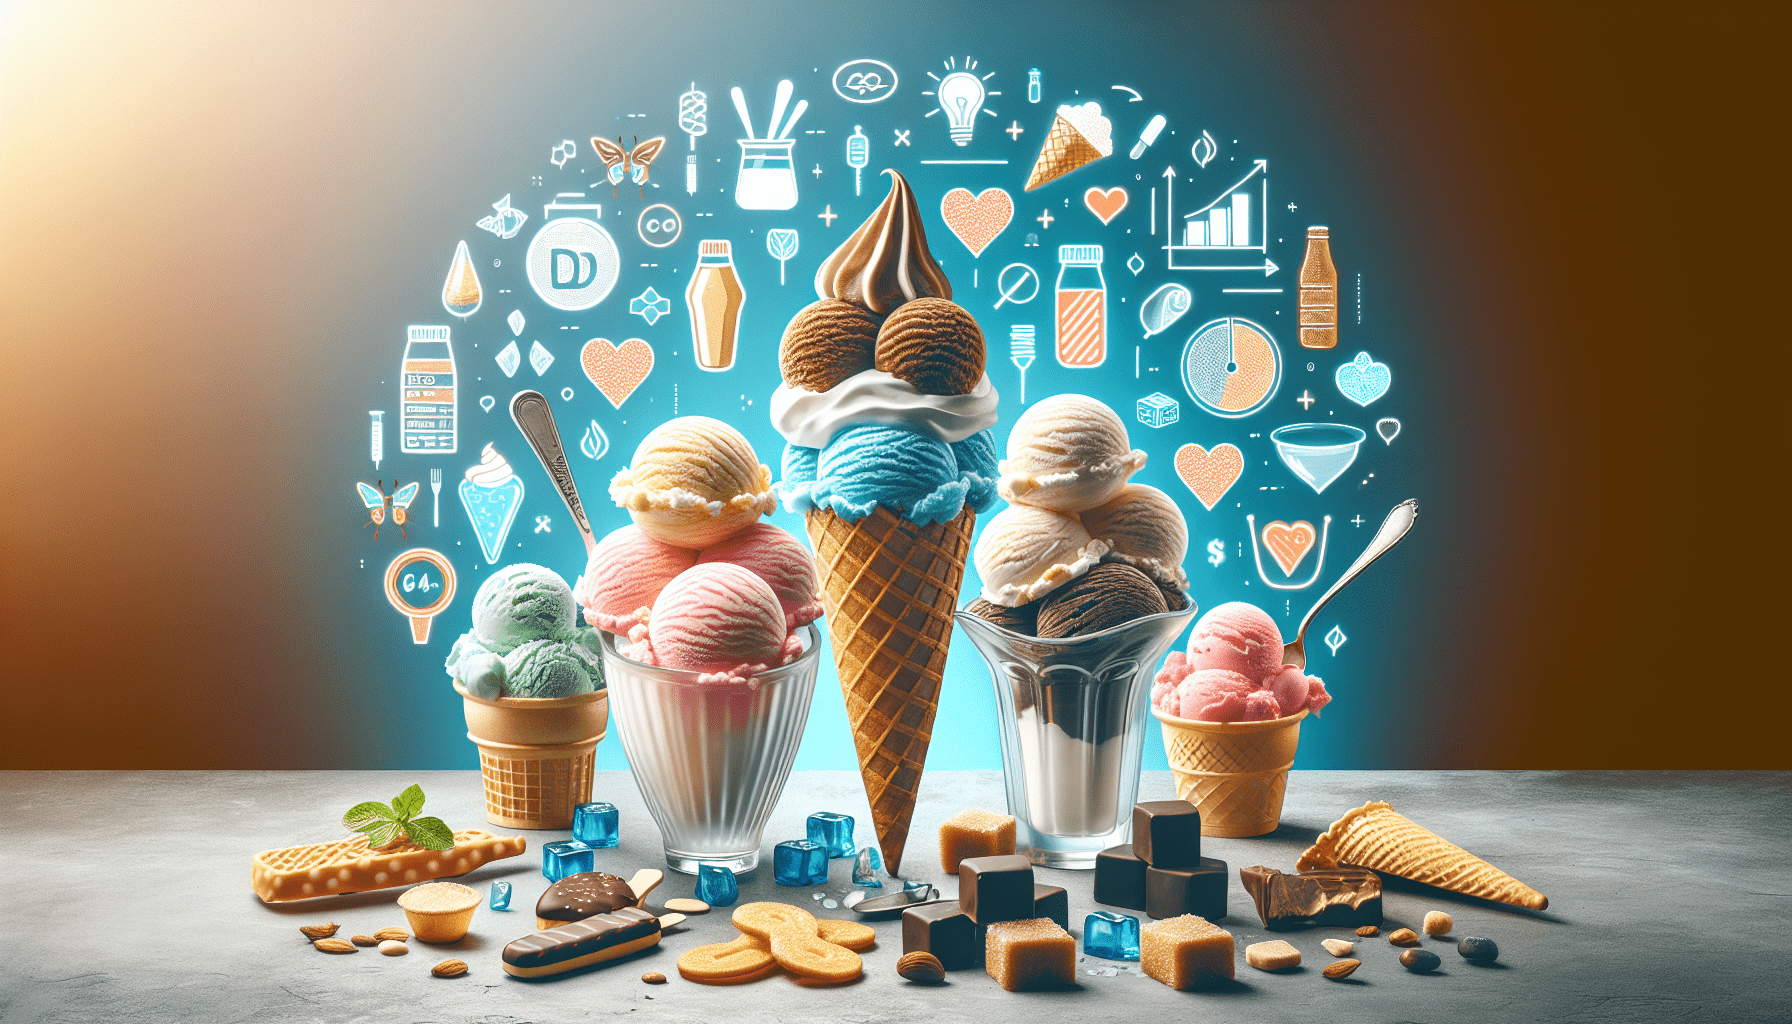 The Best Ice Cream Options for Diabetics